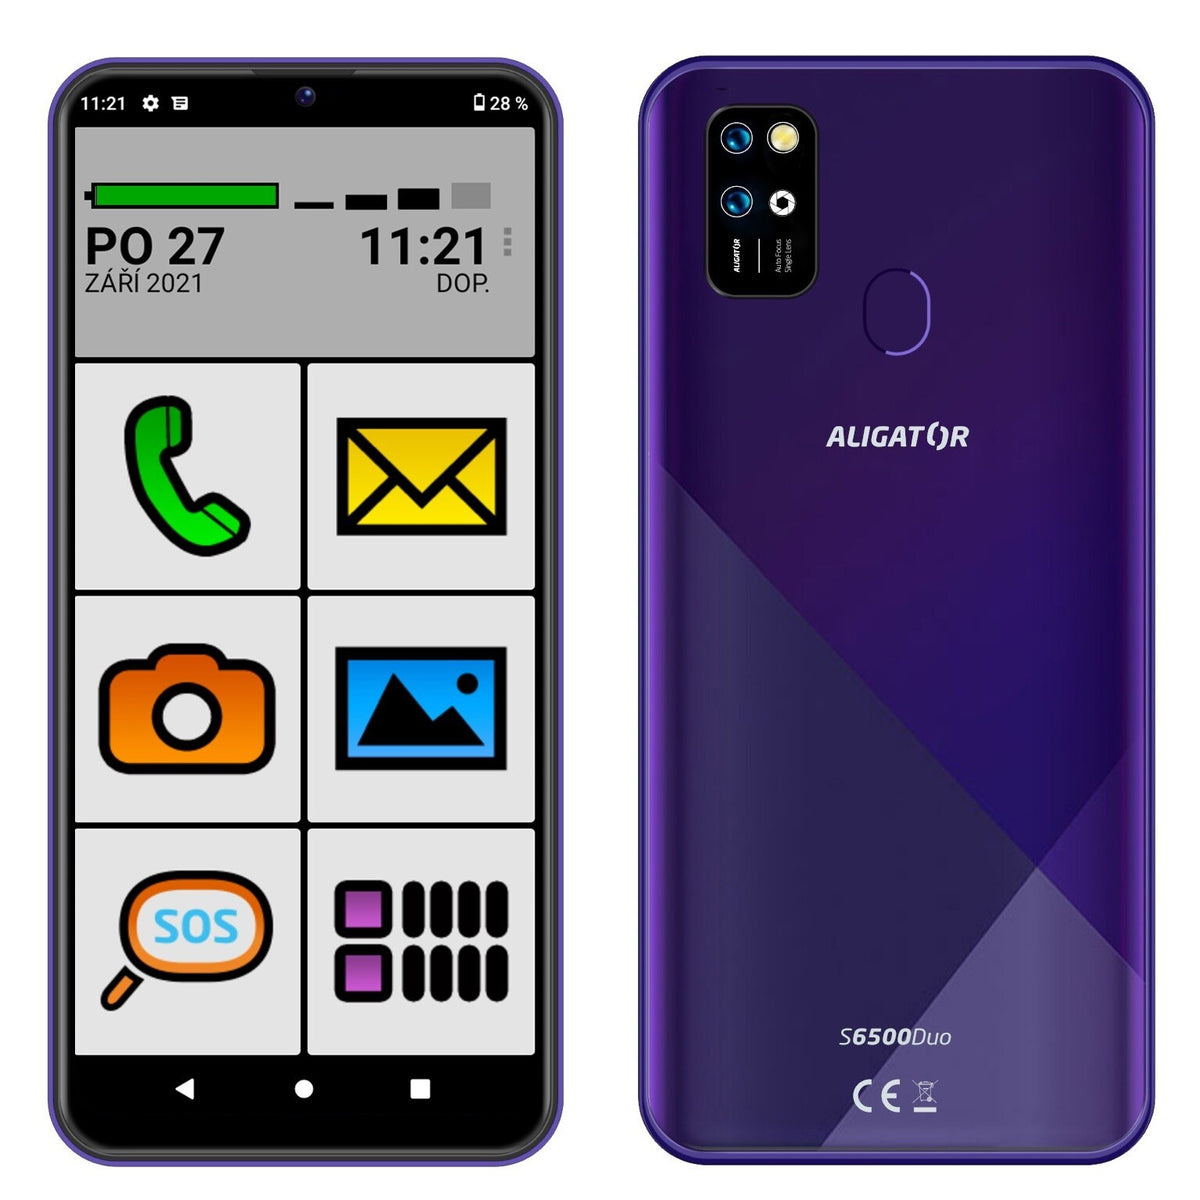 Mobilný telefón Aligator 6500 Duo 2GB/32GB SENIOR, fialová